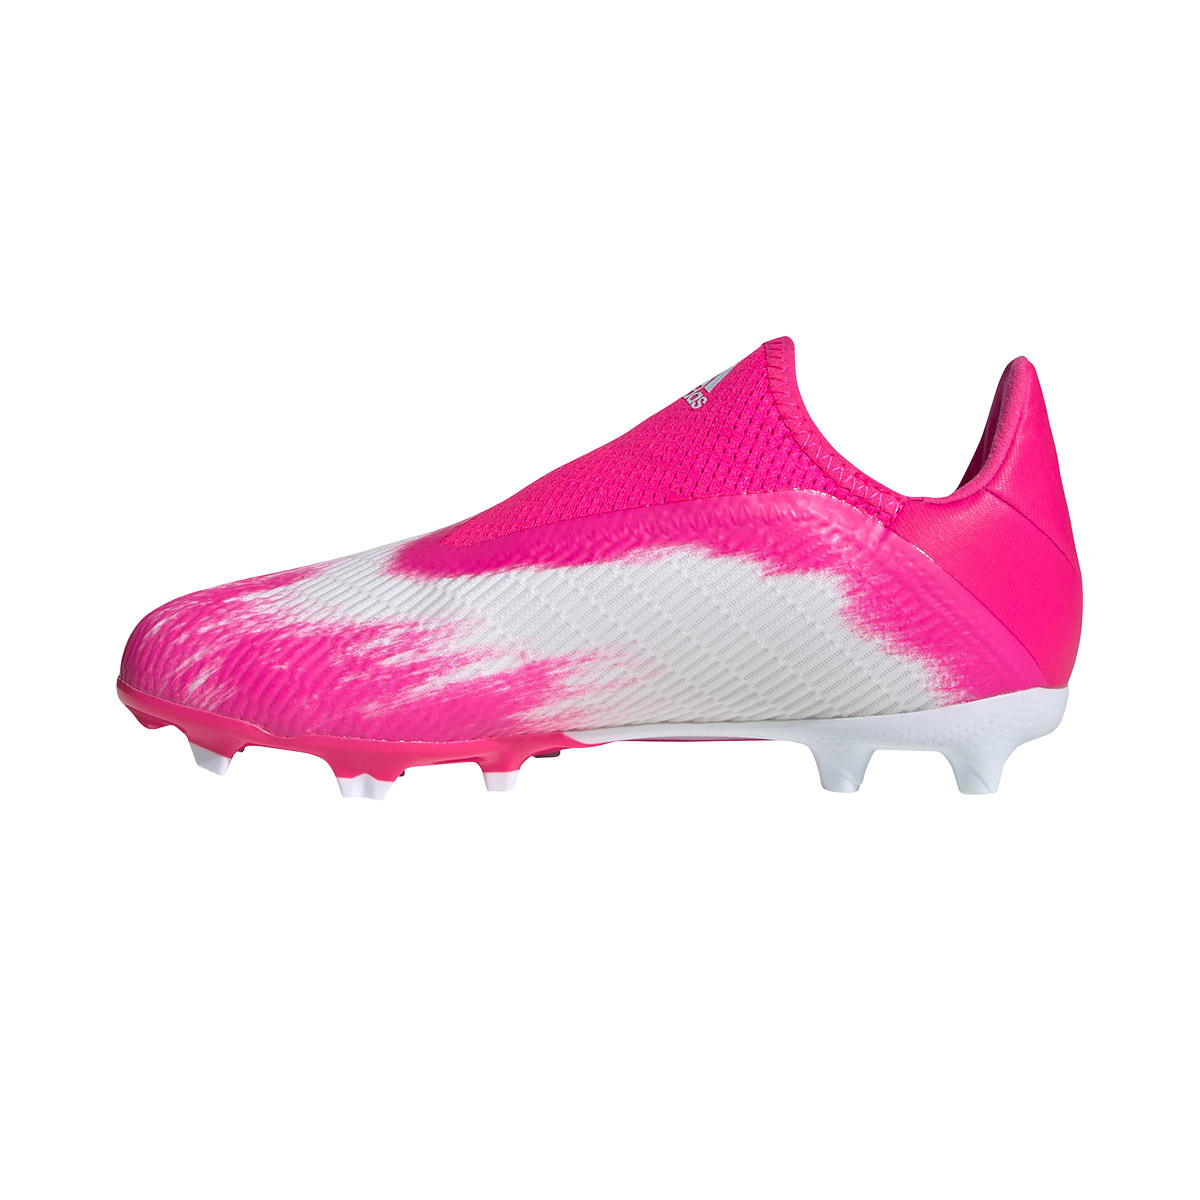 pink adidas football towel